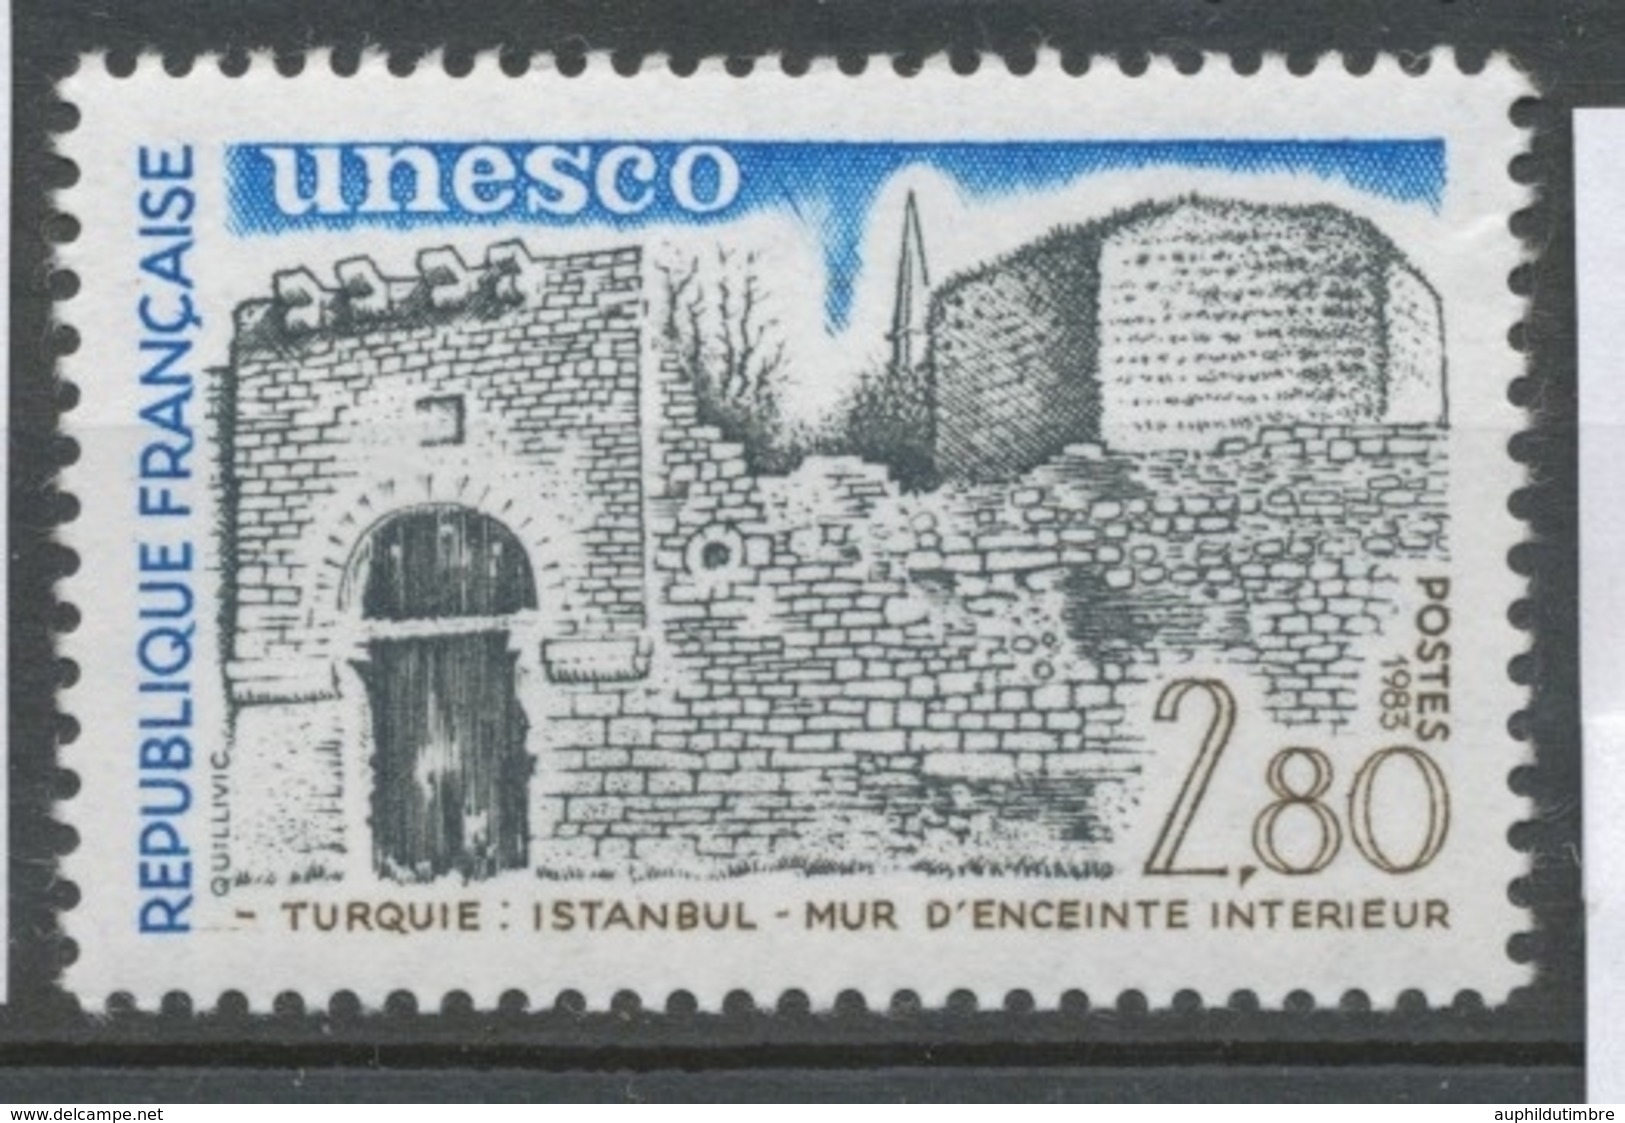 Service N°76 UNESCO Mur D'enceinte Istanbul - Turquie 2f80 ZS76 - Nuevos